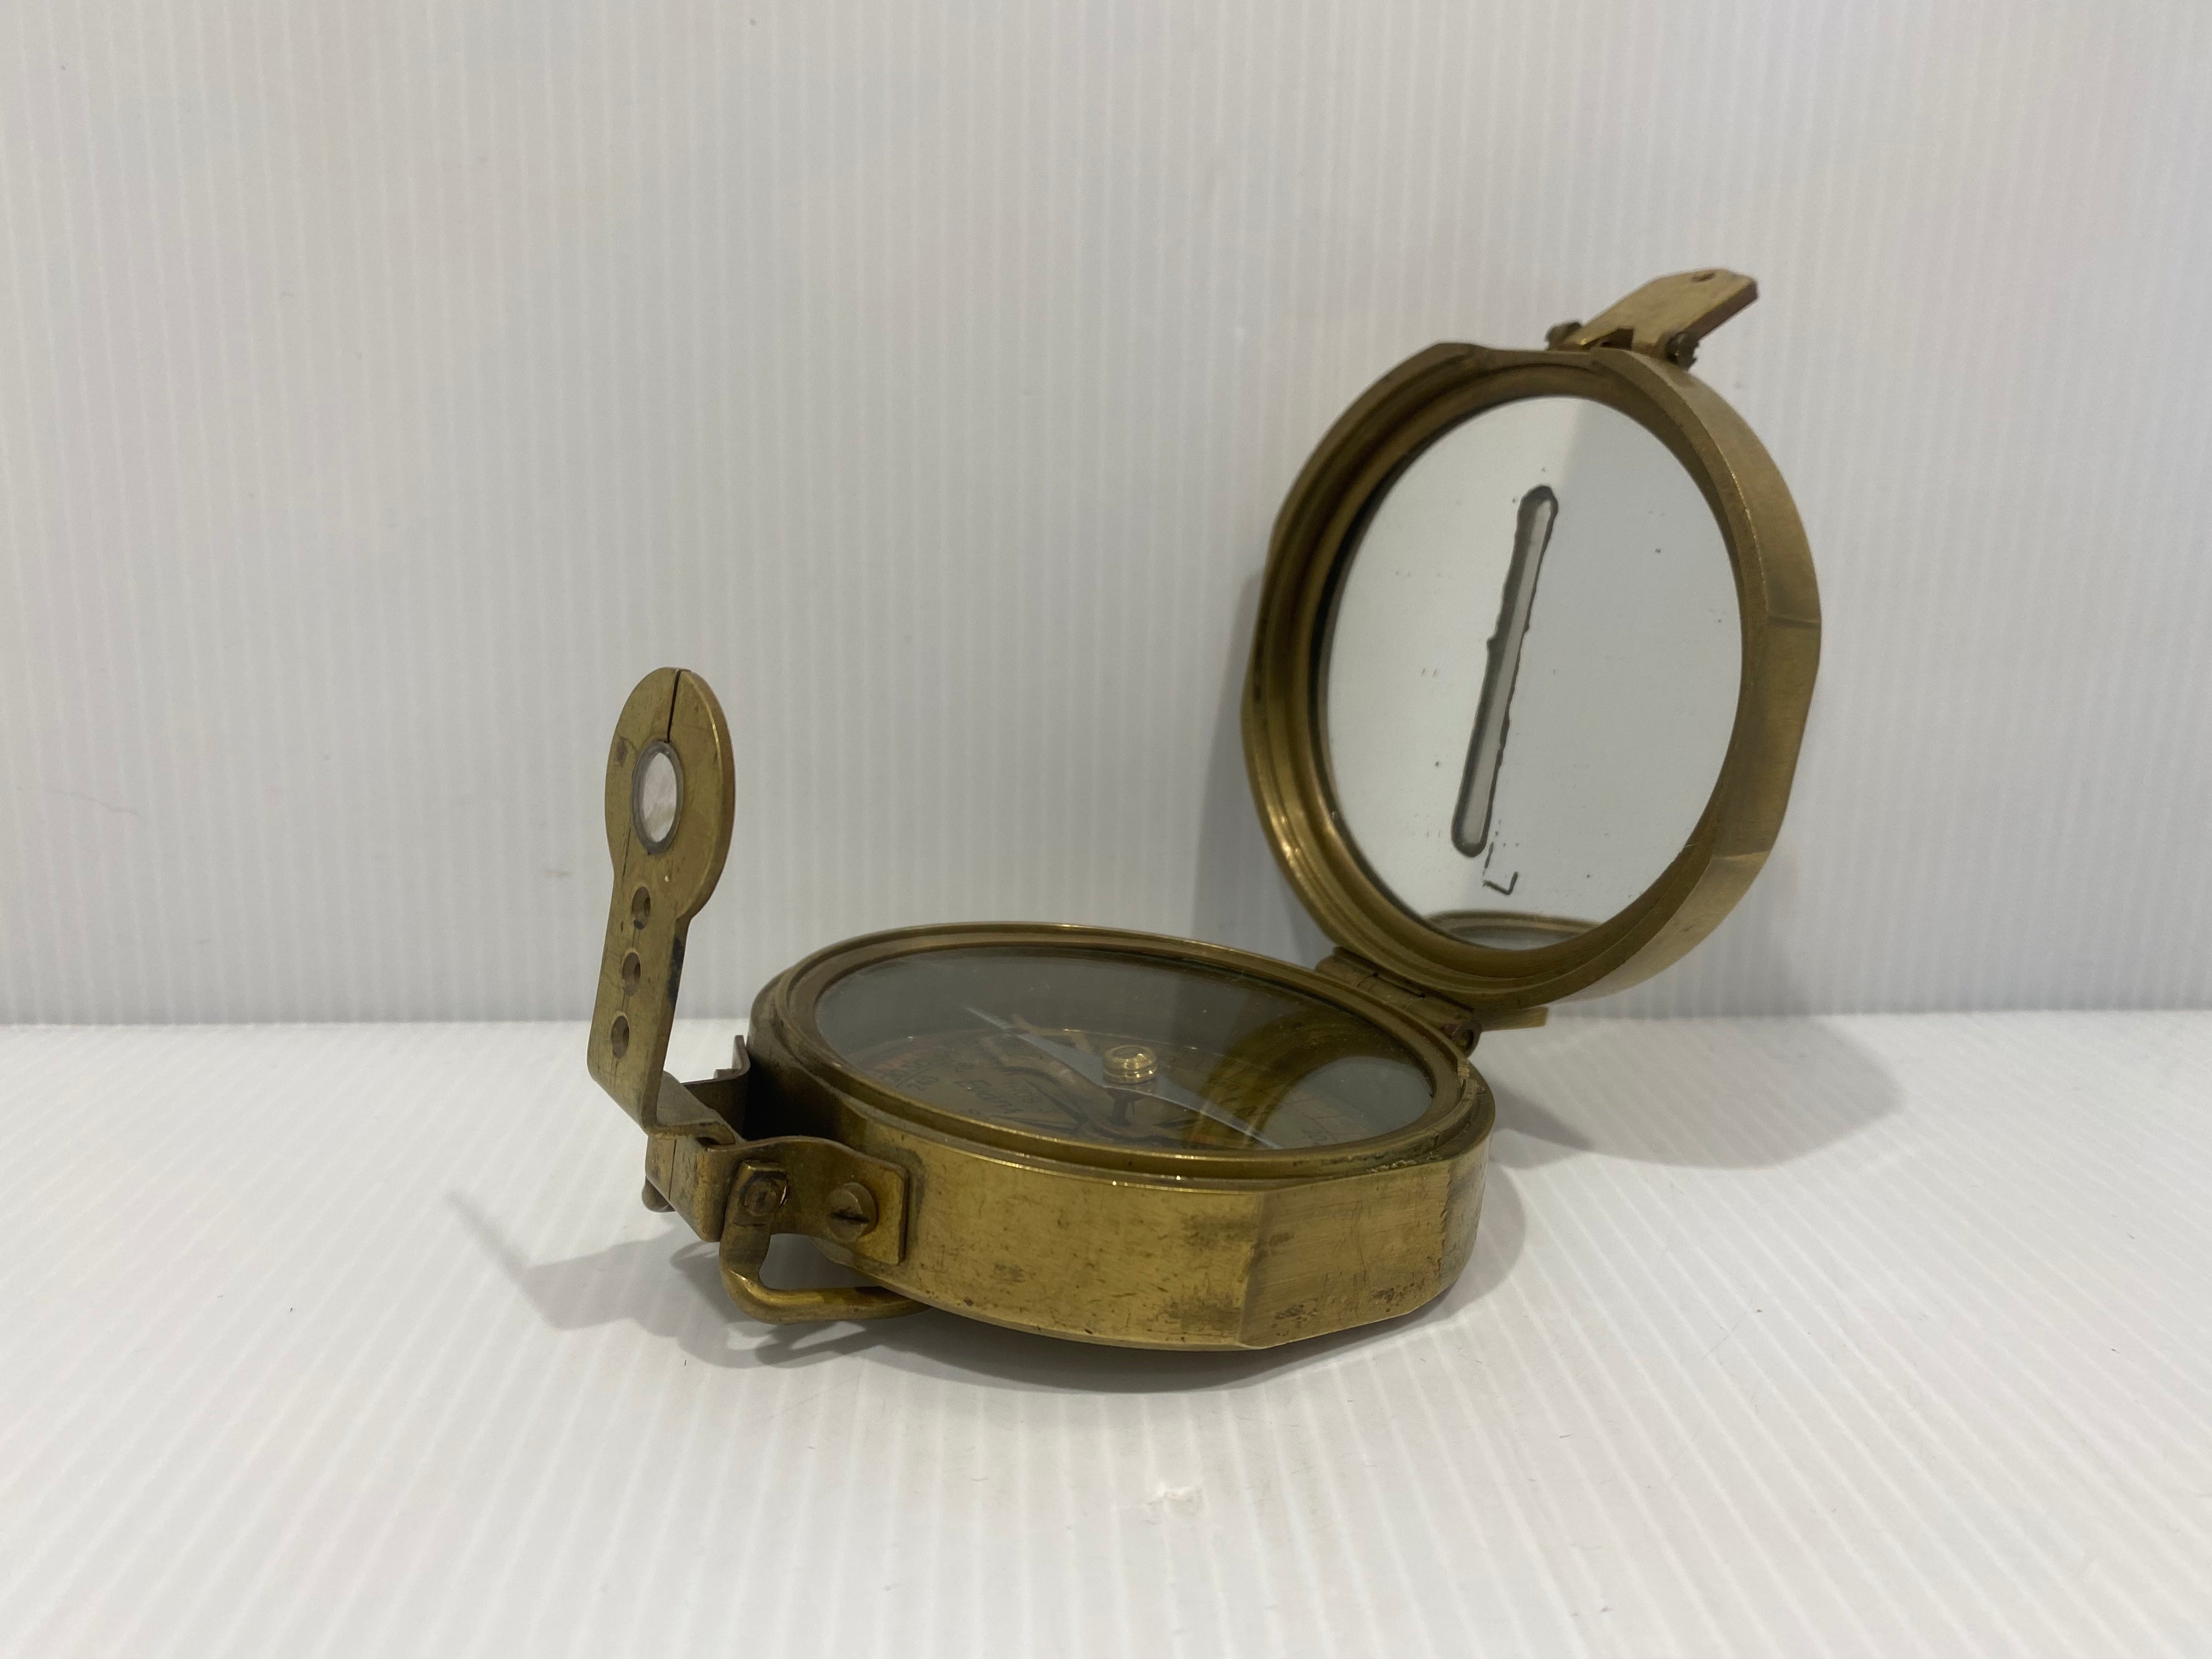 Antique Brass compass. London: Thomas Evans, 1920s